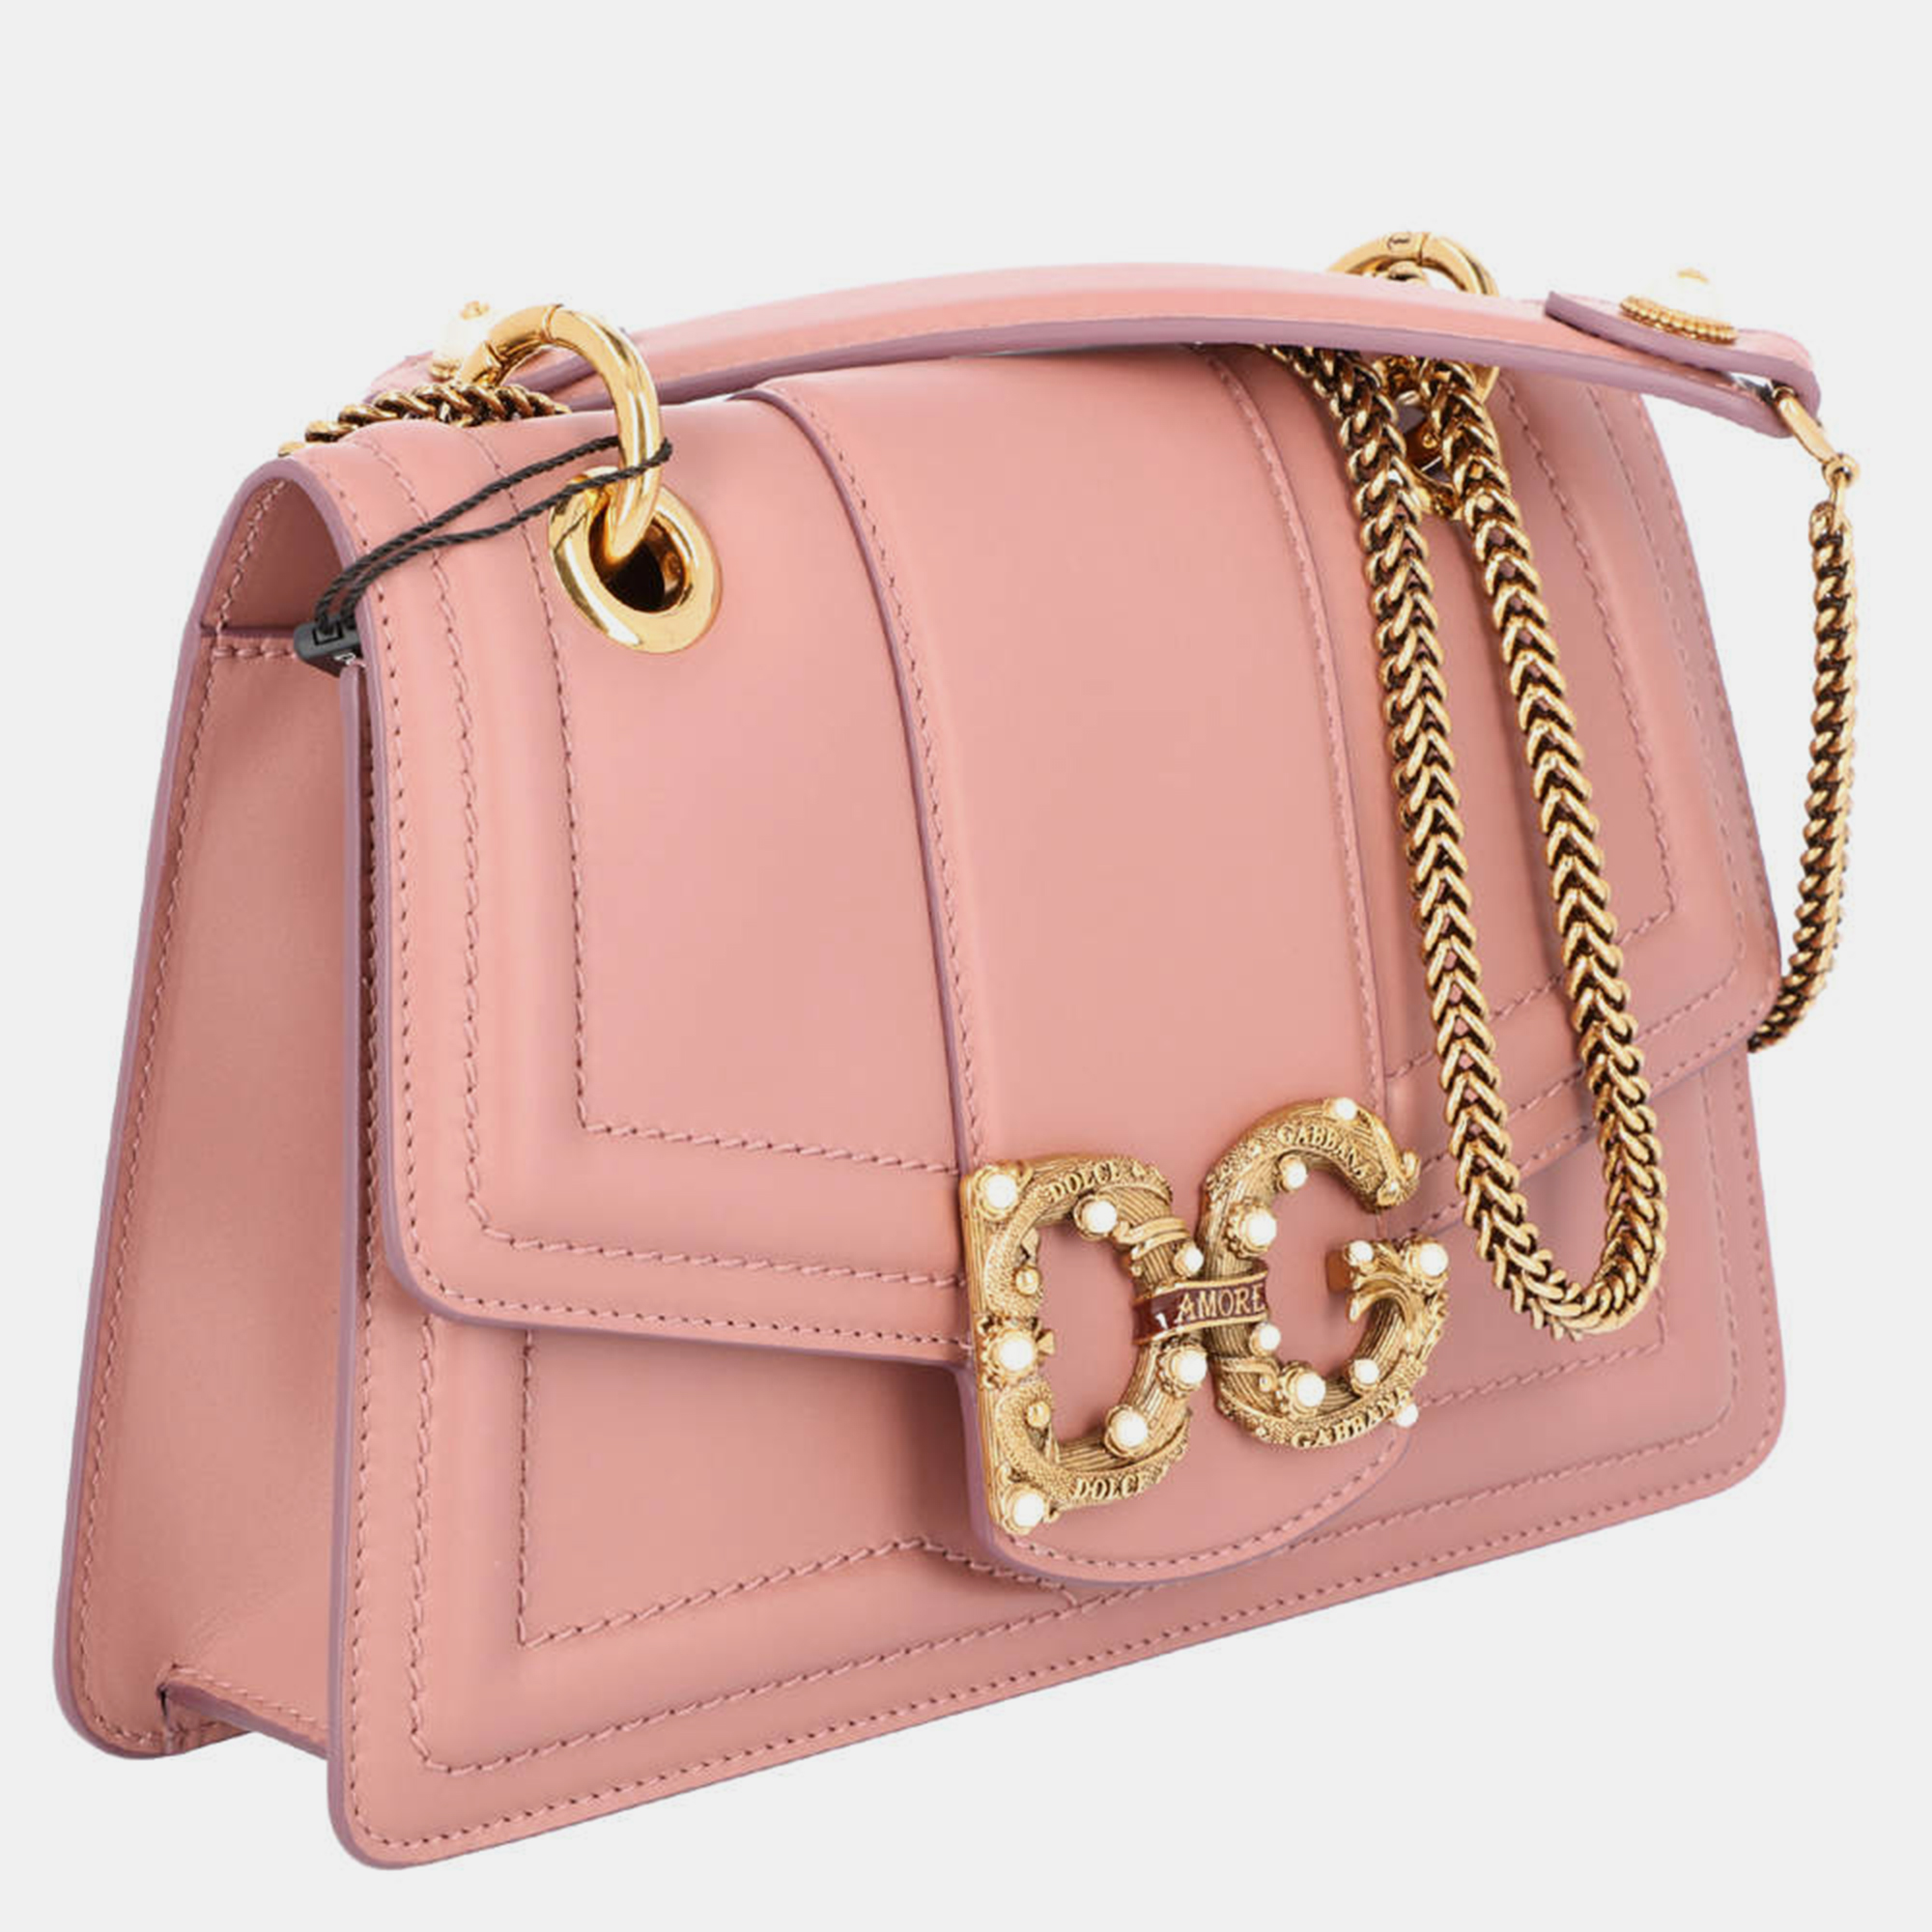 

Dolce & Gabbana Blush Pink Leather DG Amore Bag